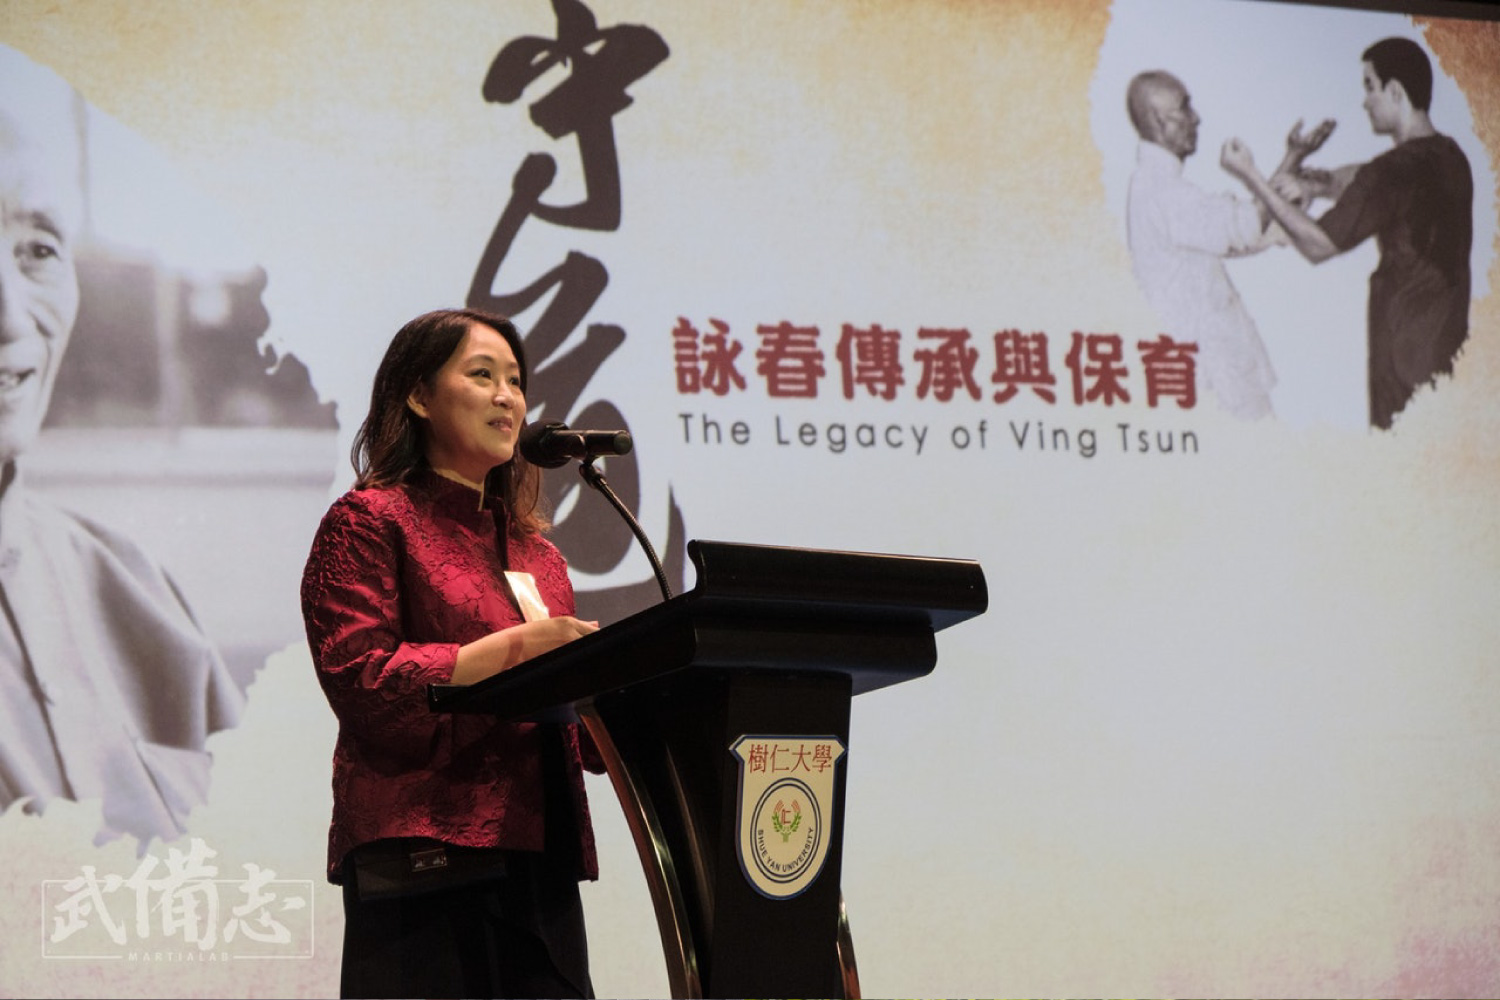 The Legacy of Ving Tsun